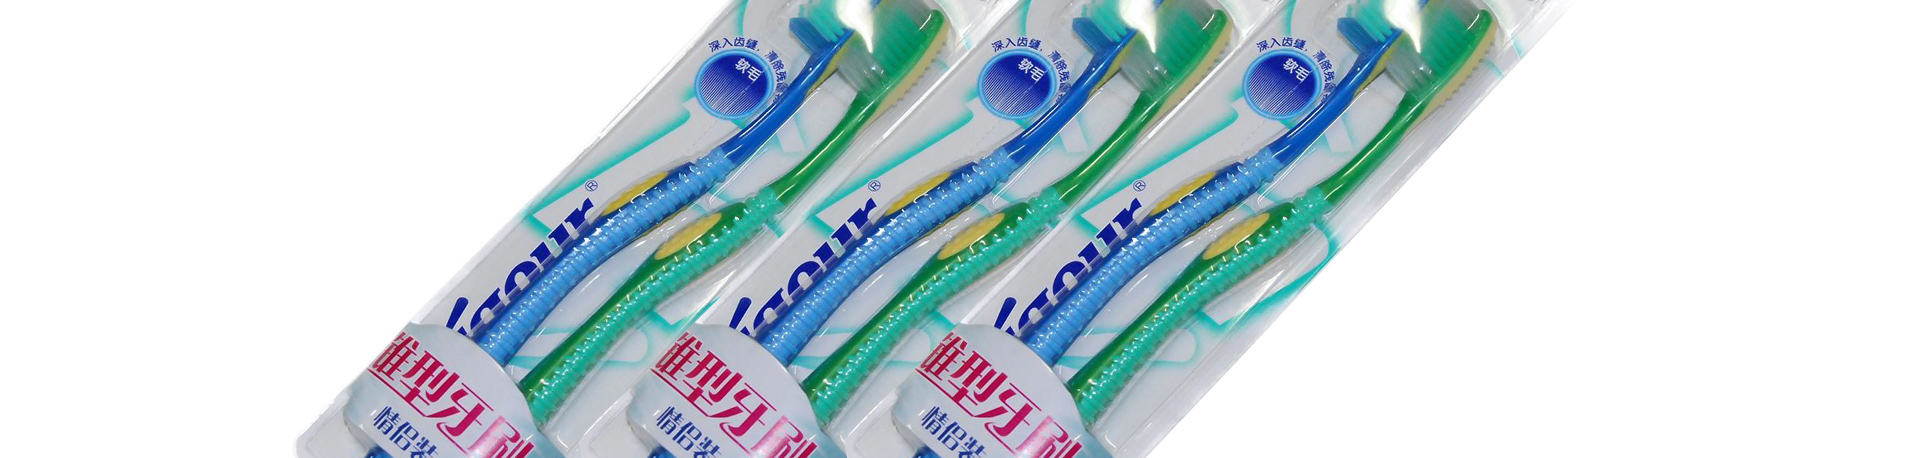 Toothbrush Packaging